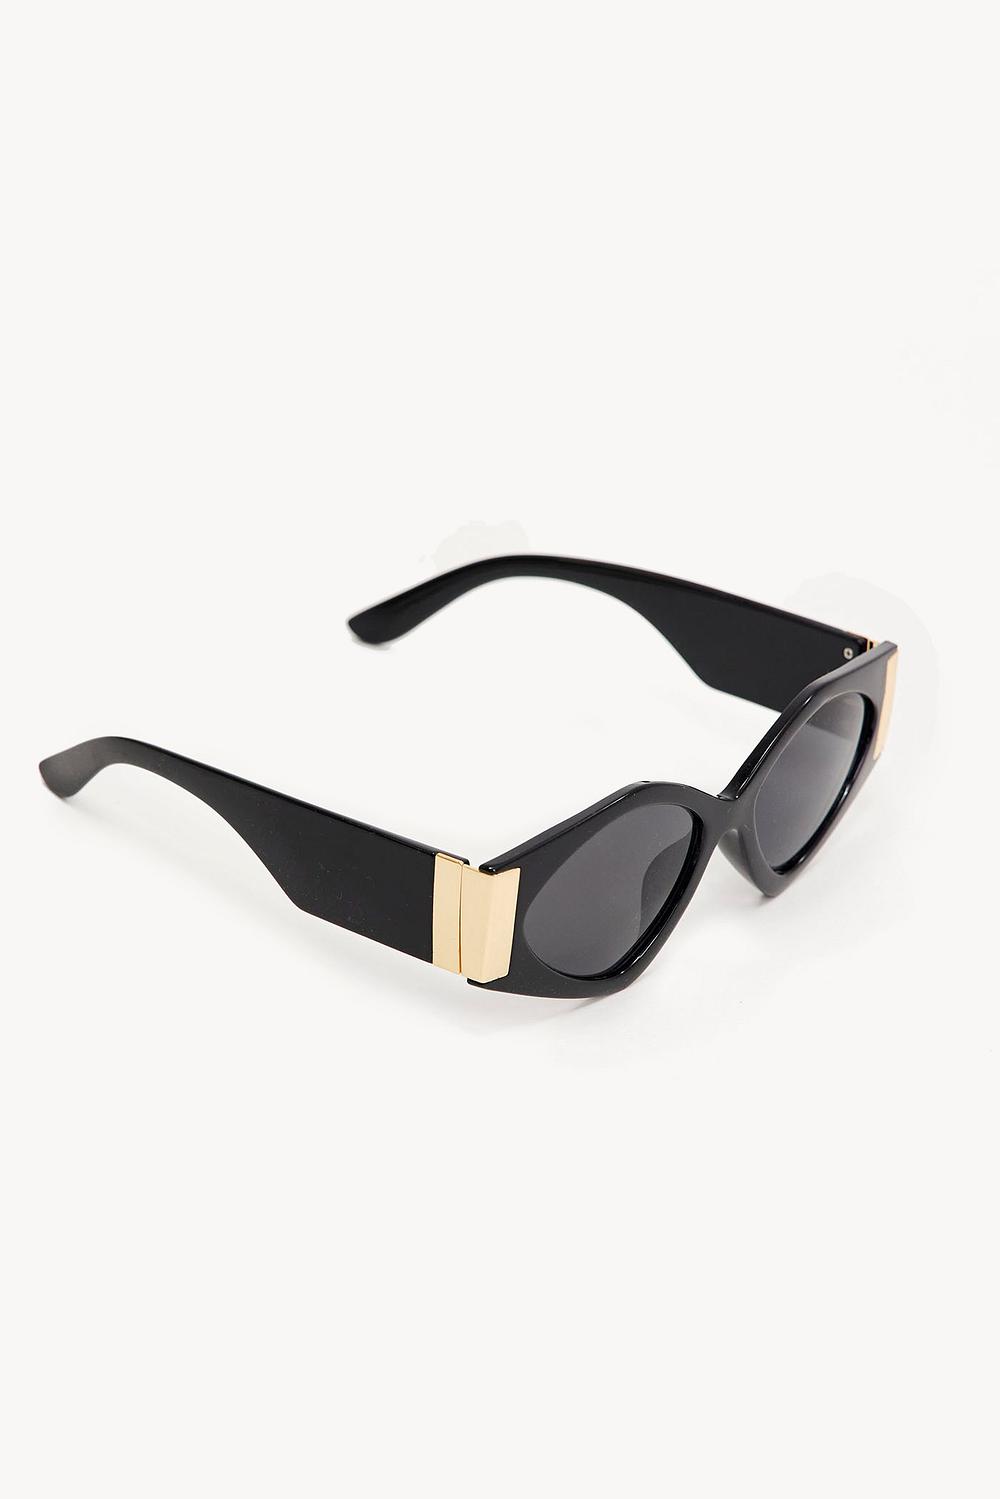 Black sunglasses with golden details